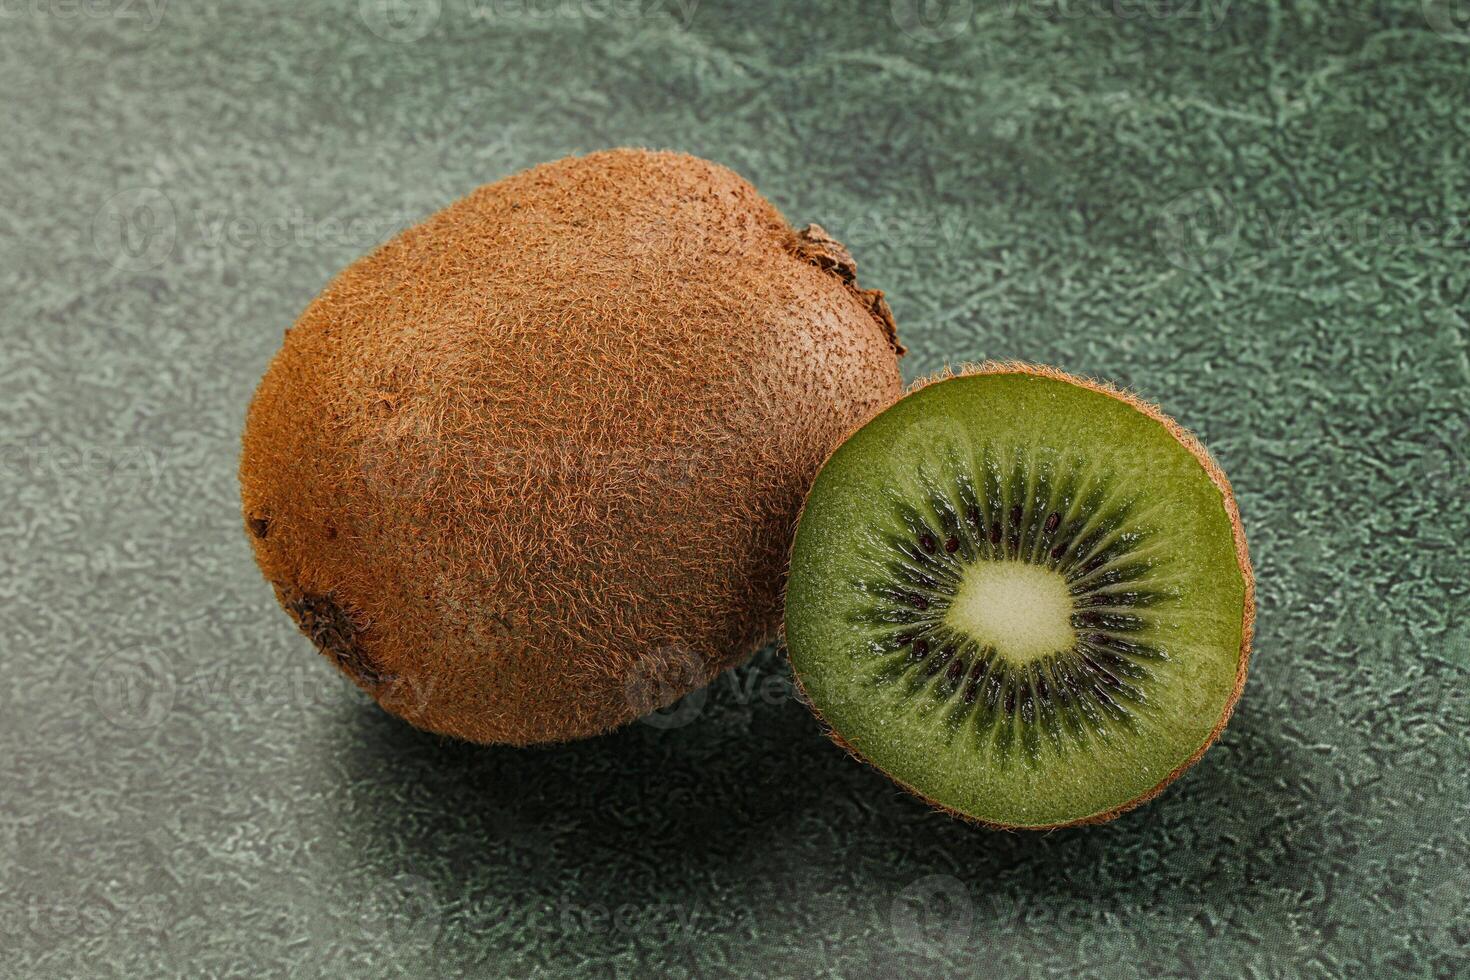 doce e suculento kiwi fruta foto